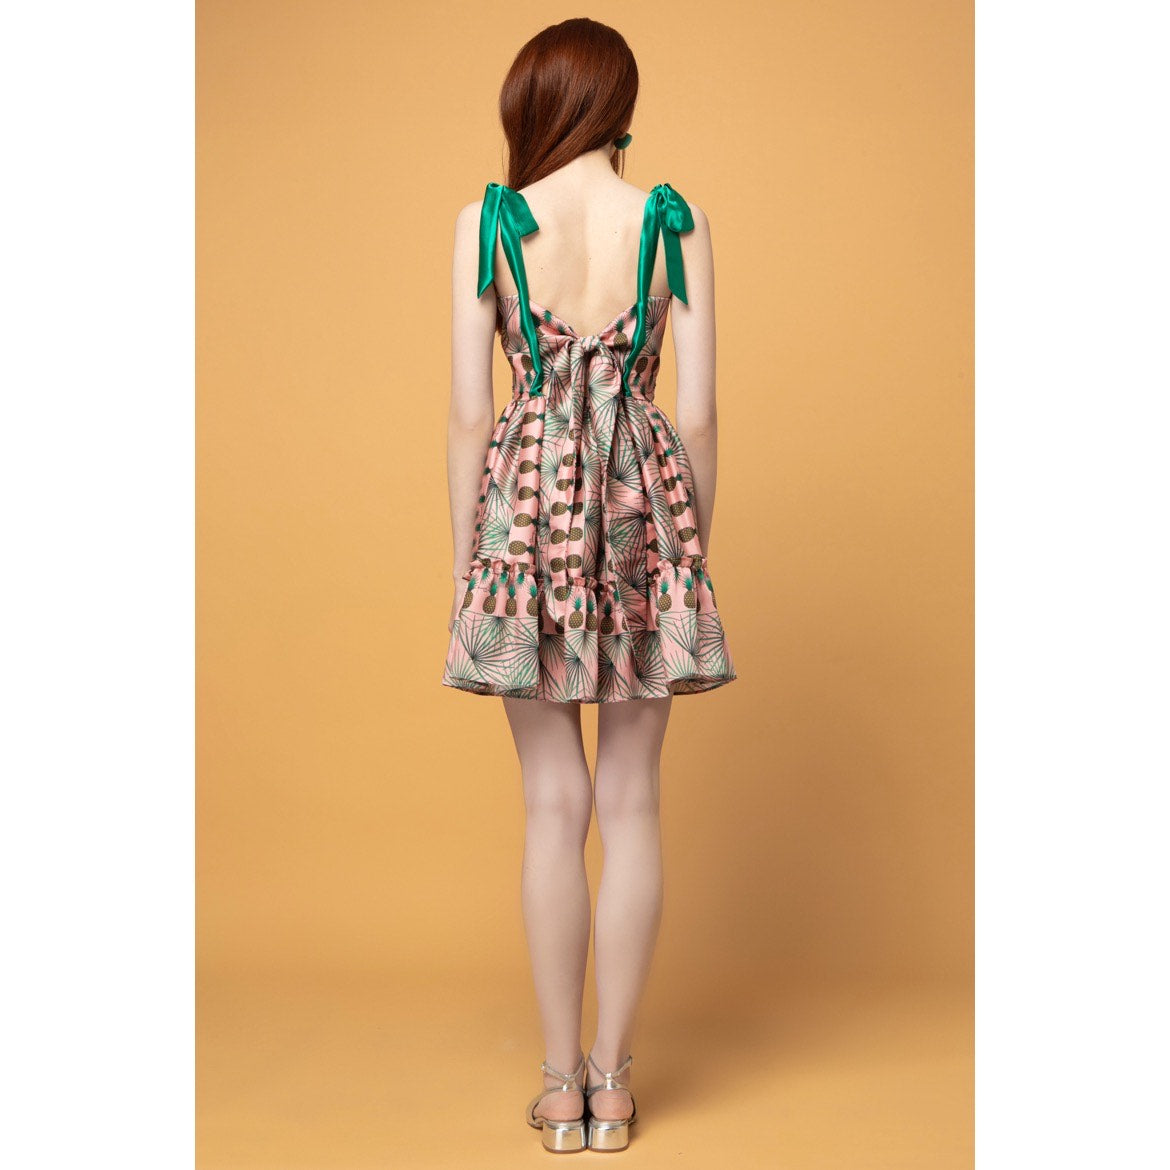 Tita Dress v.1.0 - Mini Silky Ruffle Printed Dress with Bow Tie Knots